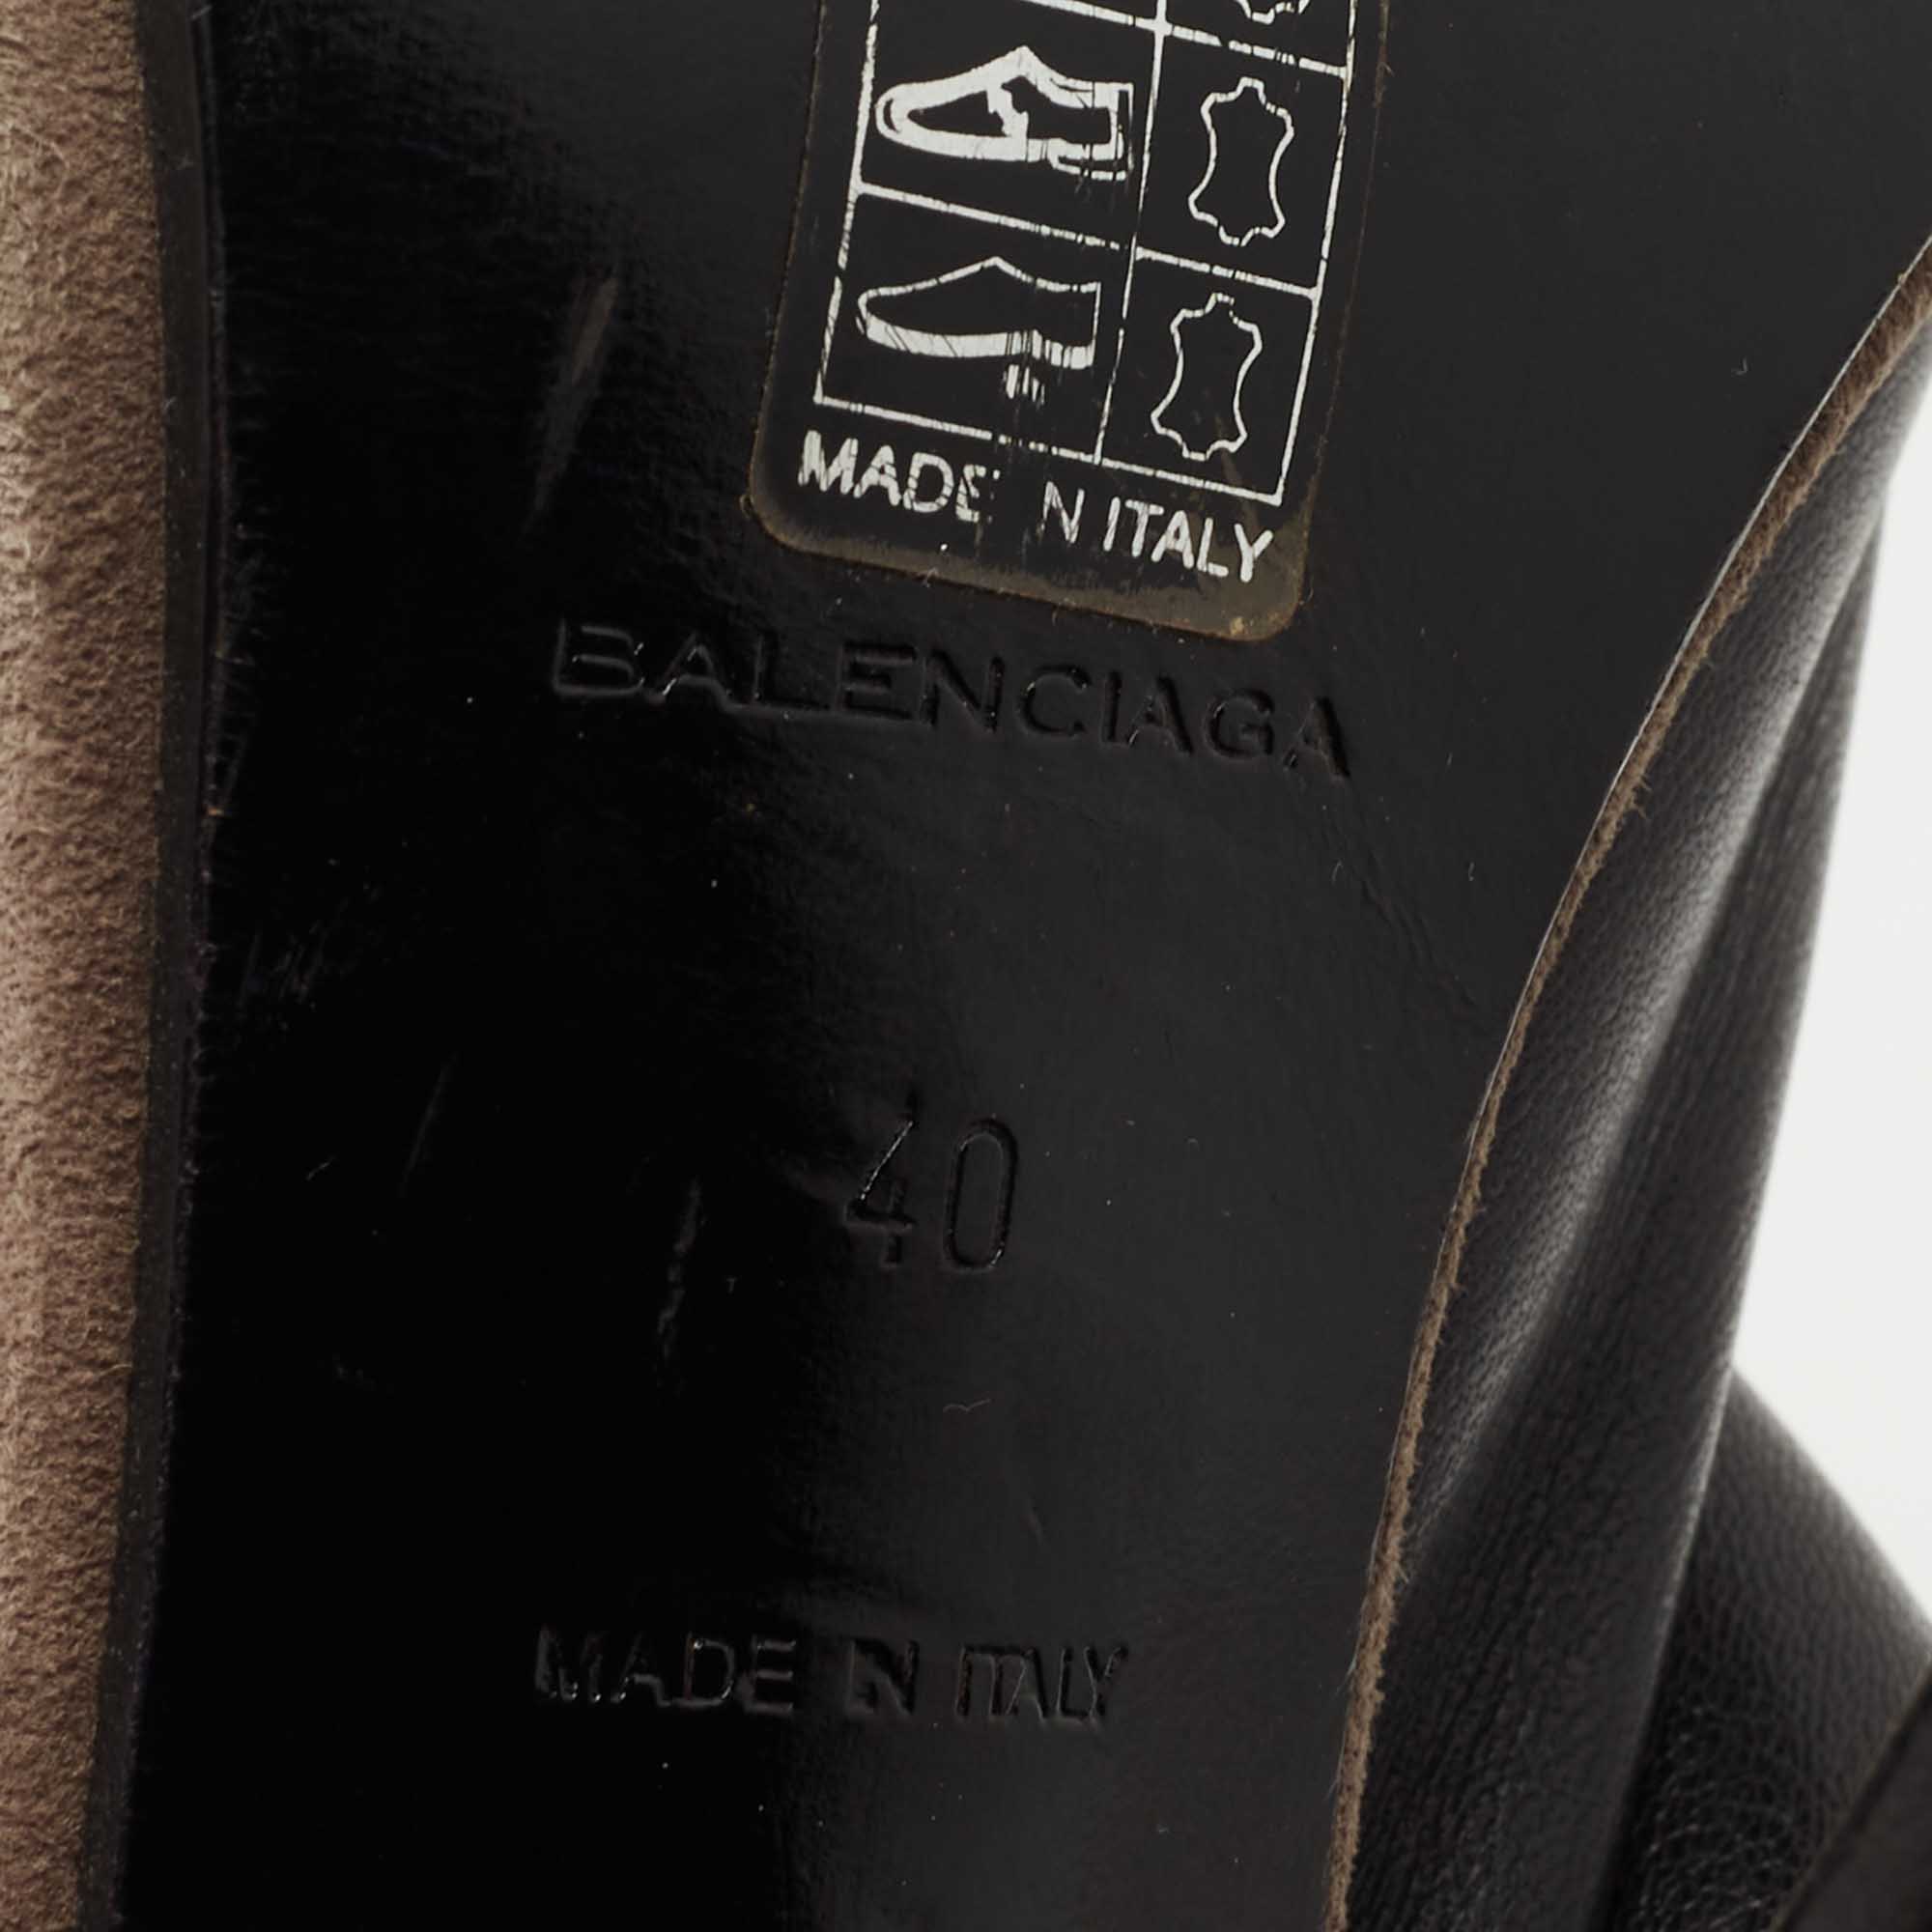 Balenciaga Black Leather Glove Slingback Sandals Size 40